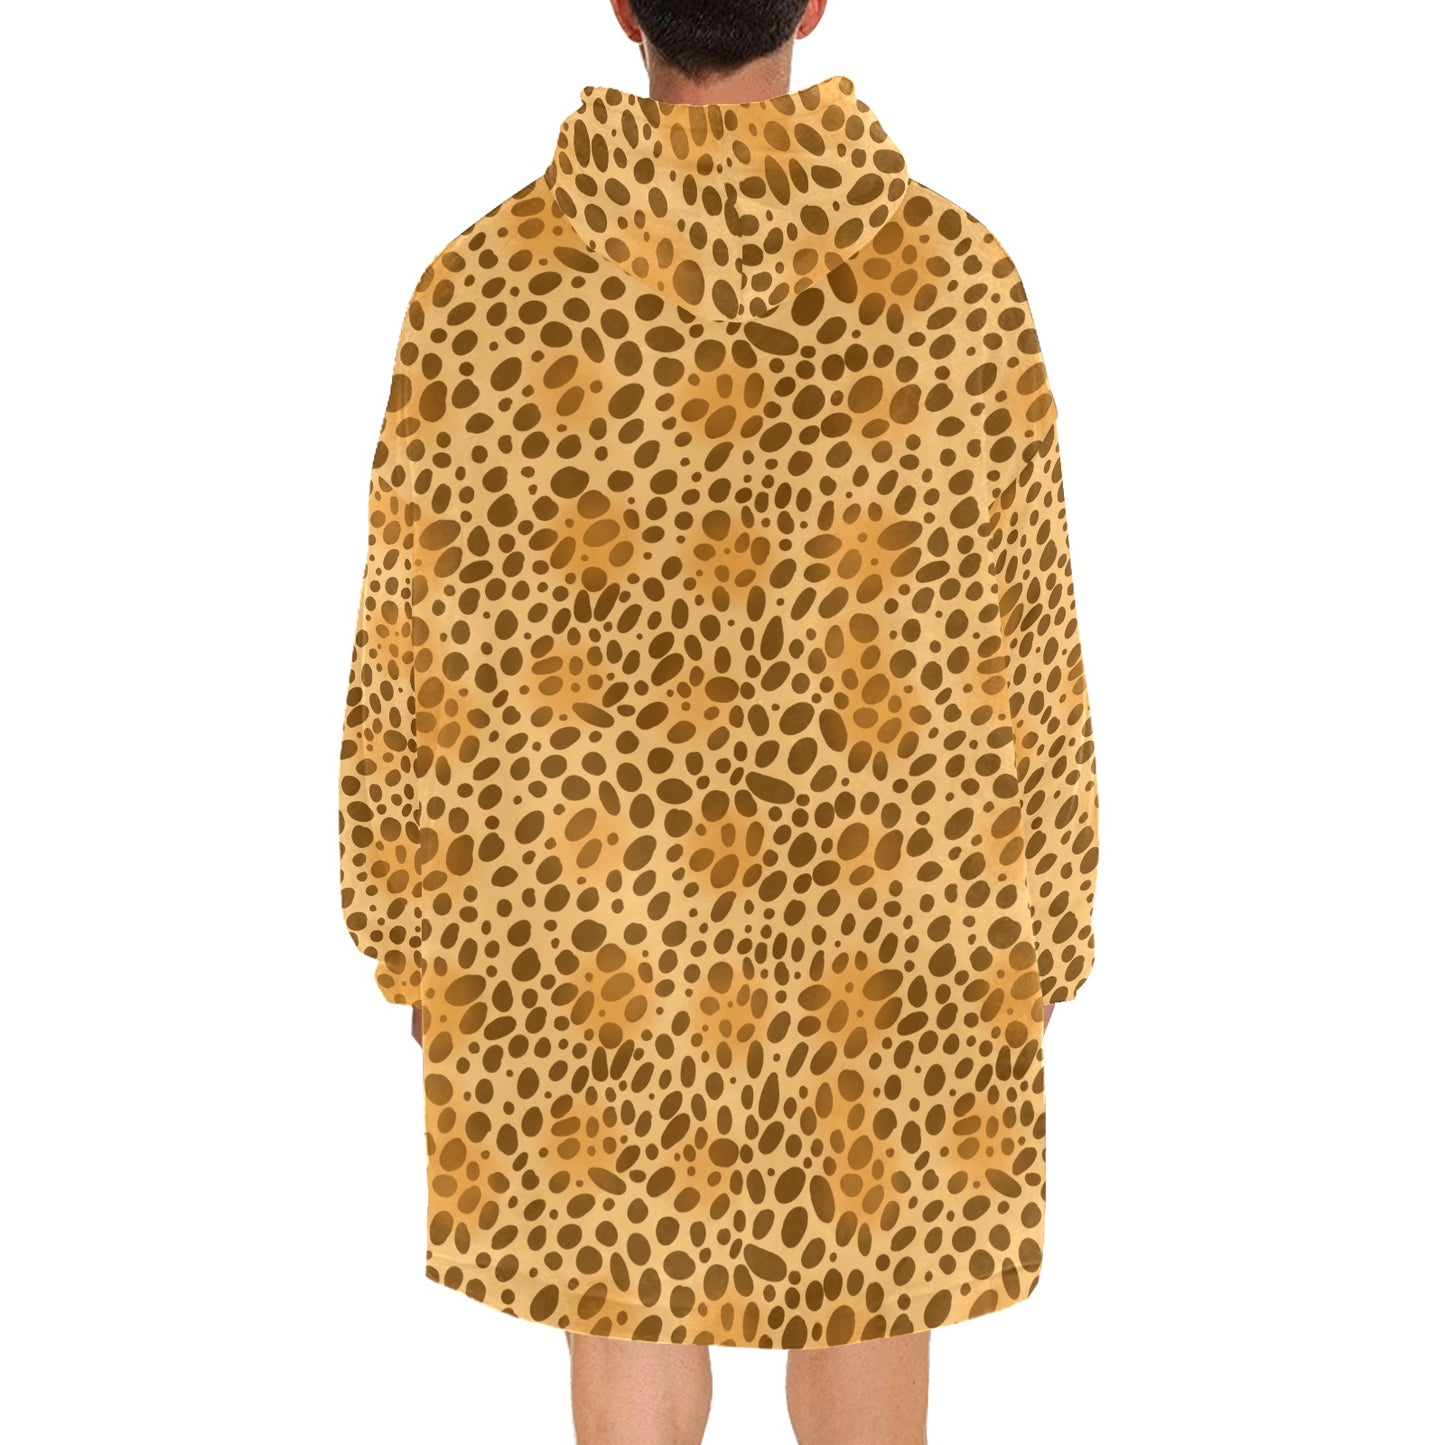 Leopard Print Fleece Hooded BlanketLeopard print fleece hooded blanket - Stay warm and trendy with this stylish and cozy fleece blanket featuring a striking leopard print pattern.